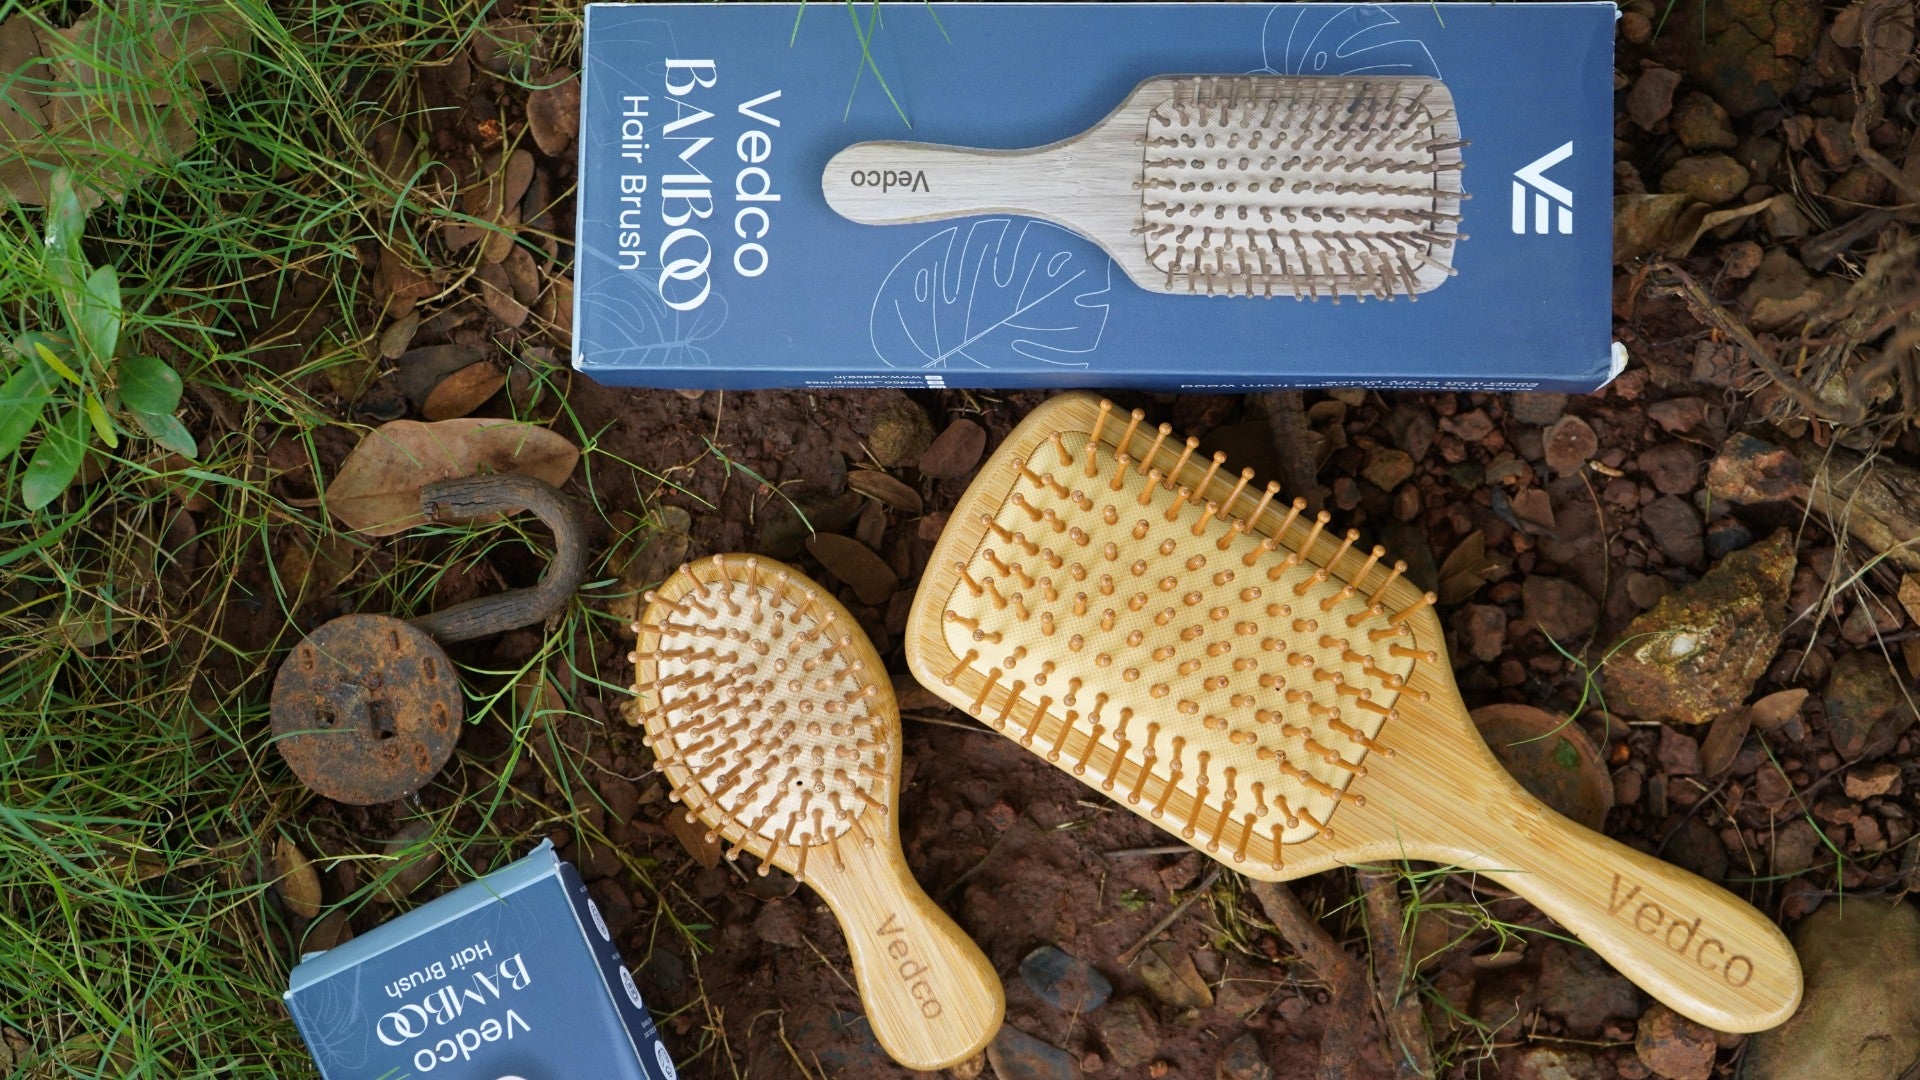 Vedco Wooden Hair Brush & Mini Brush Combo